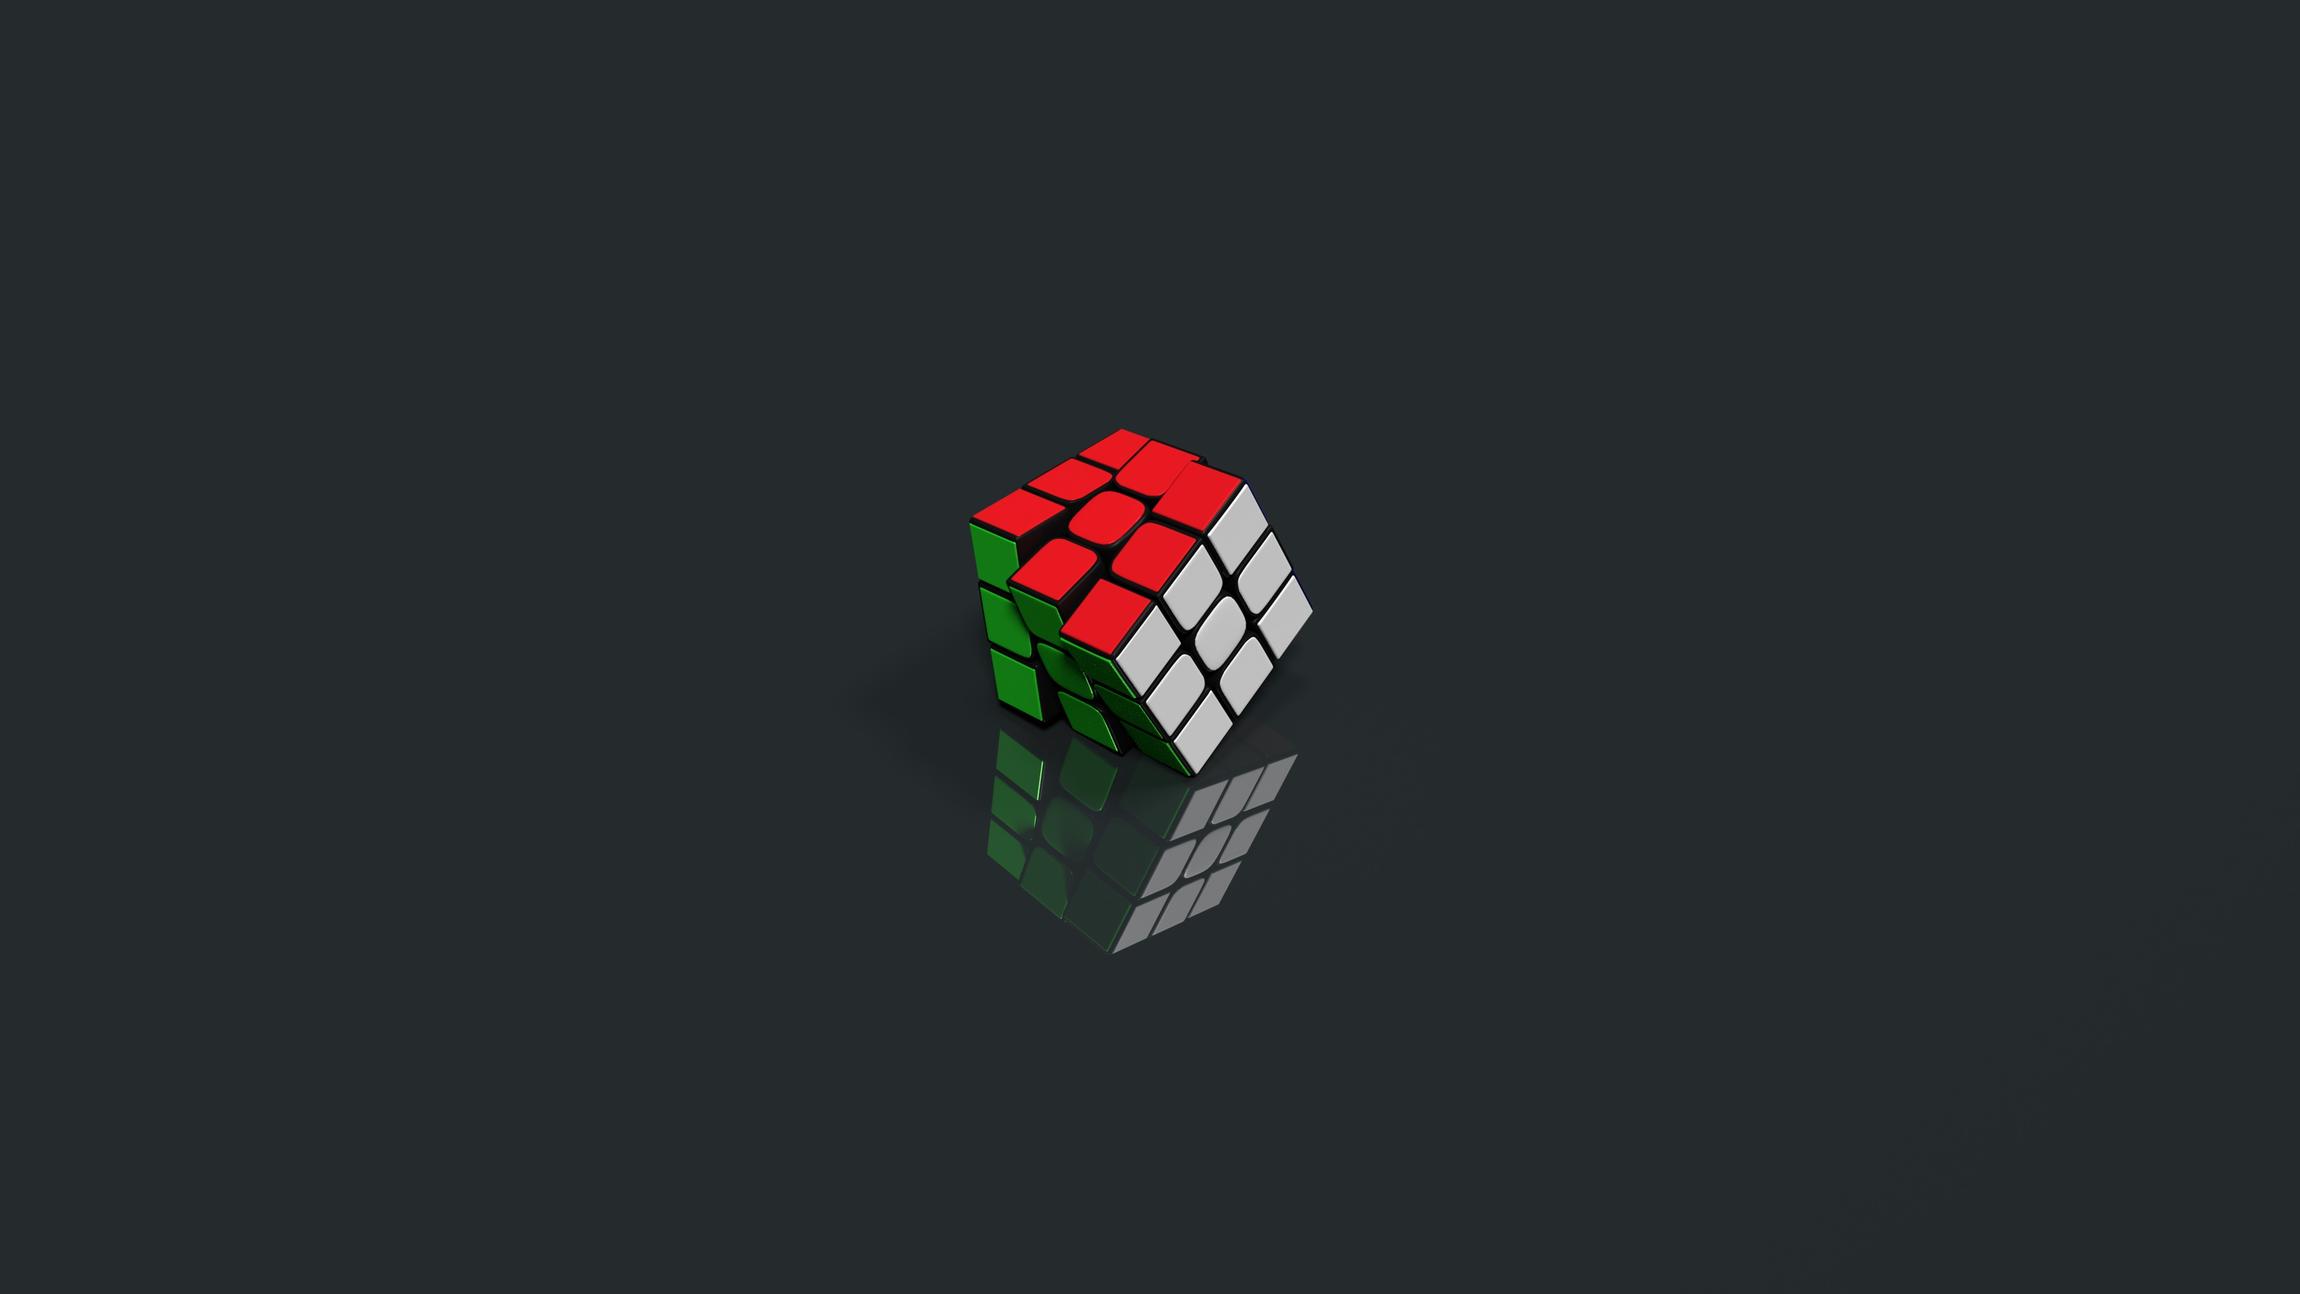 Giải Rubik